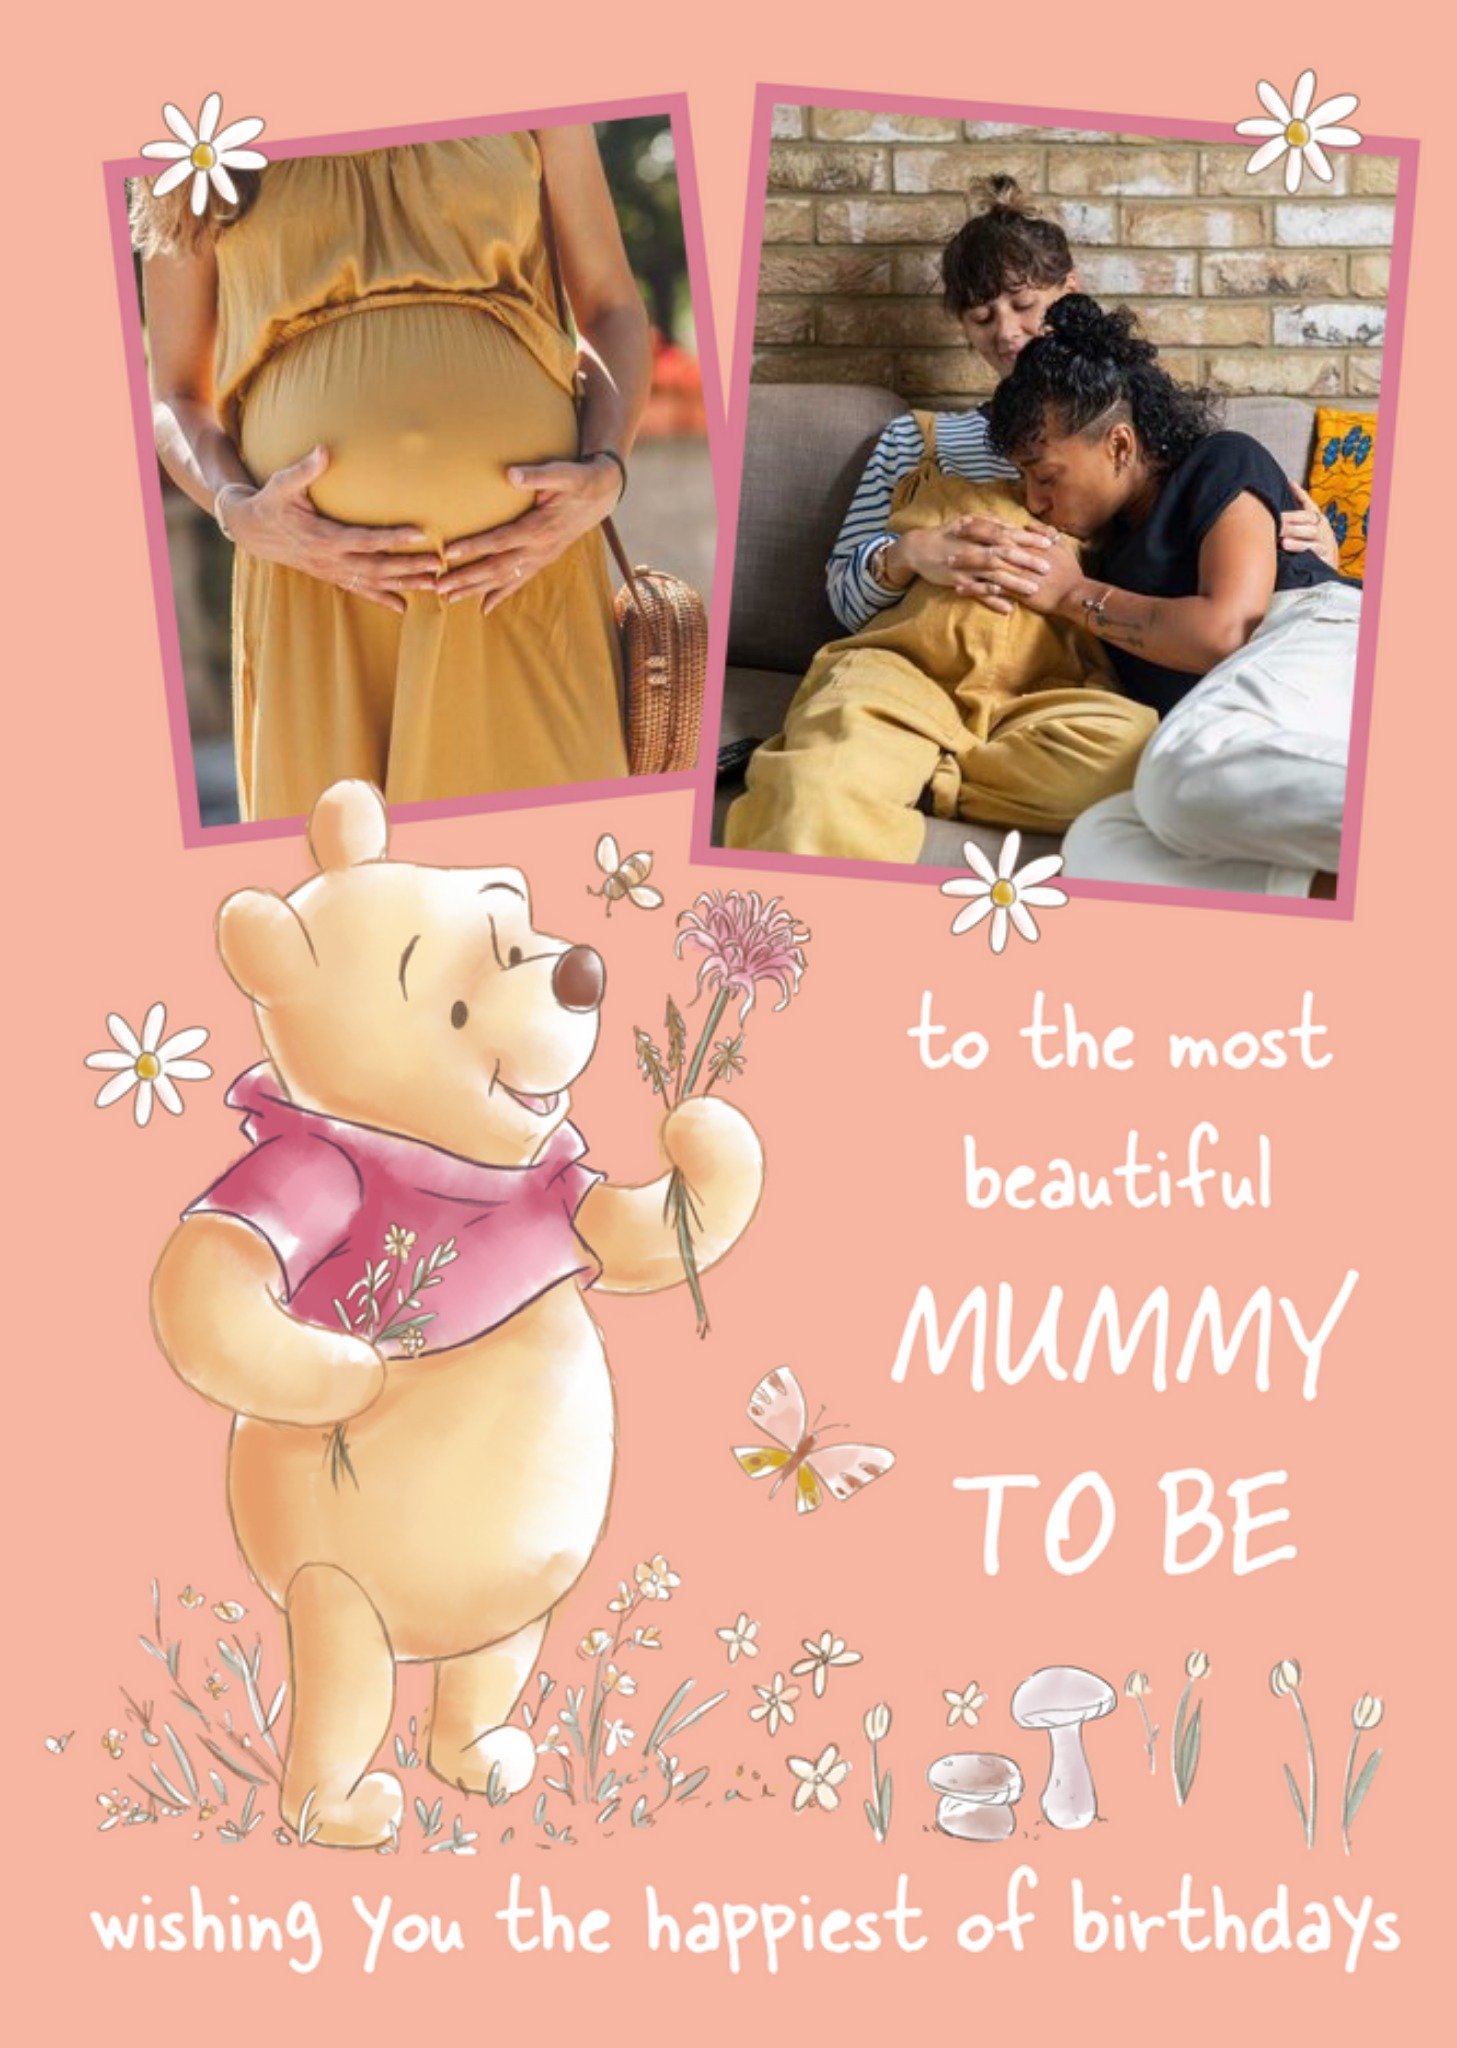 Cute Disney Winnie The Pooh Photo Upload Mummy To Be Birthday Card Ecard